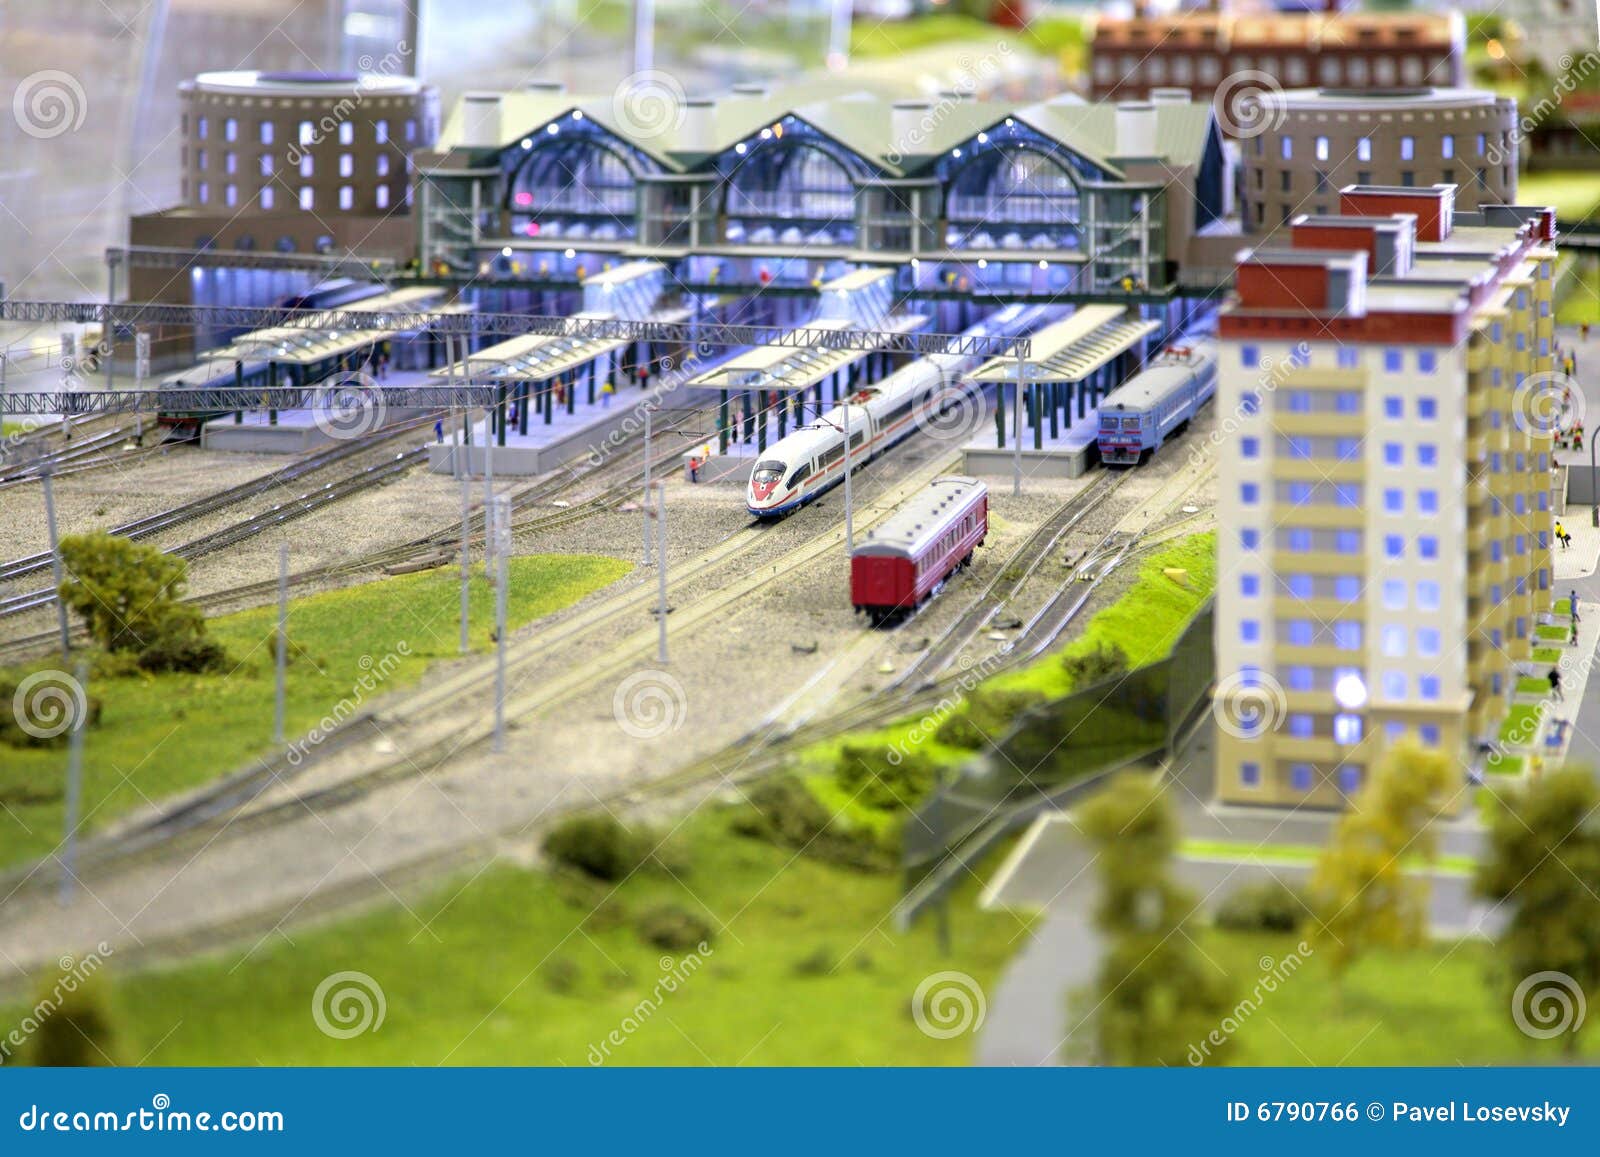 Model Of Railway Station Royalty Free Stock Image - Image: 6790766